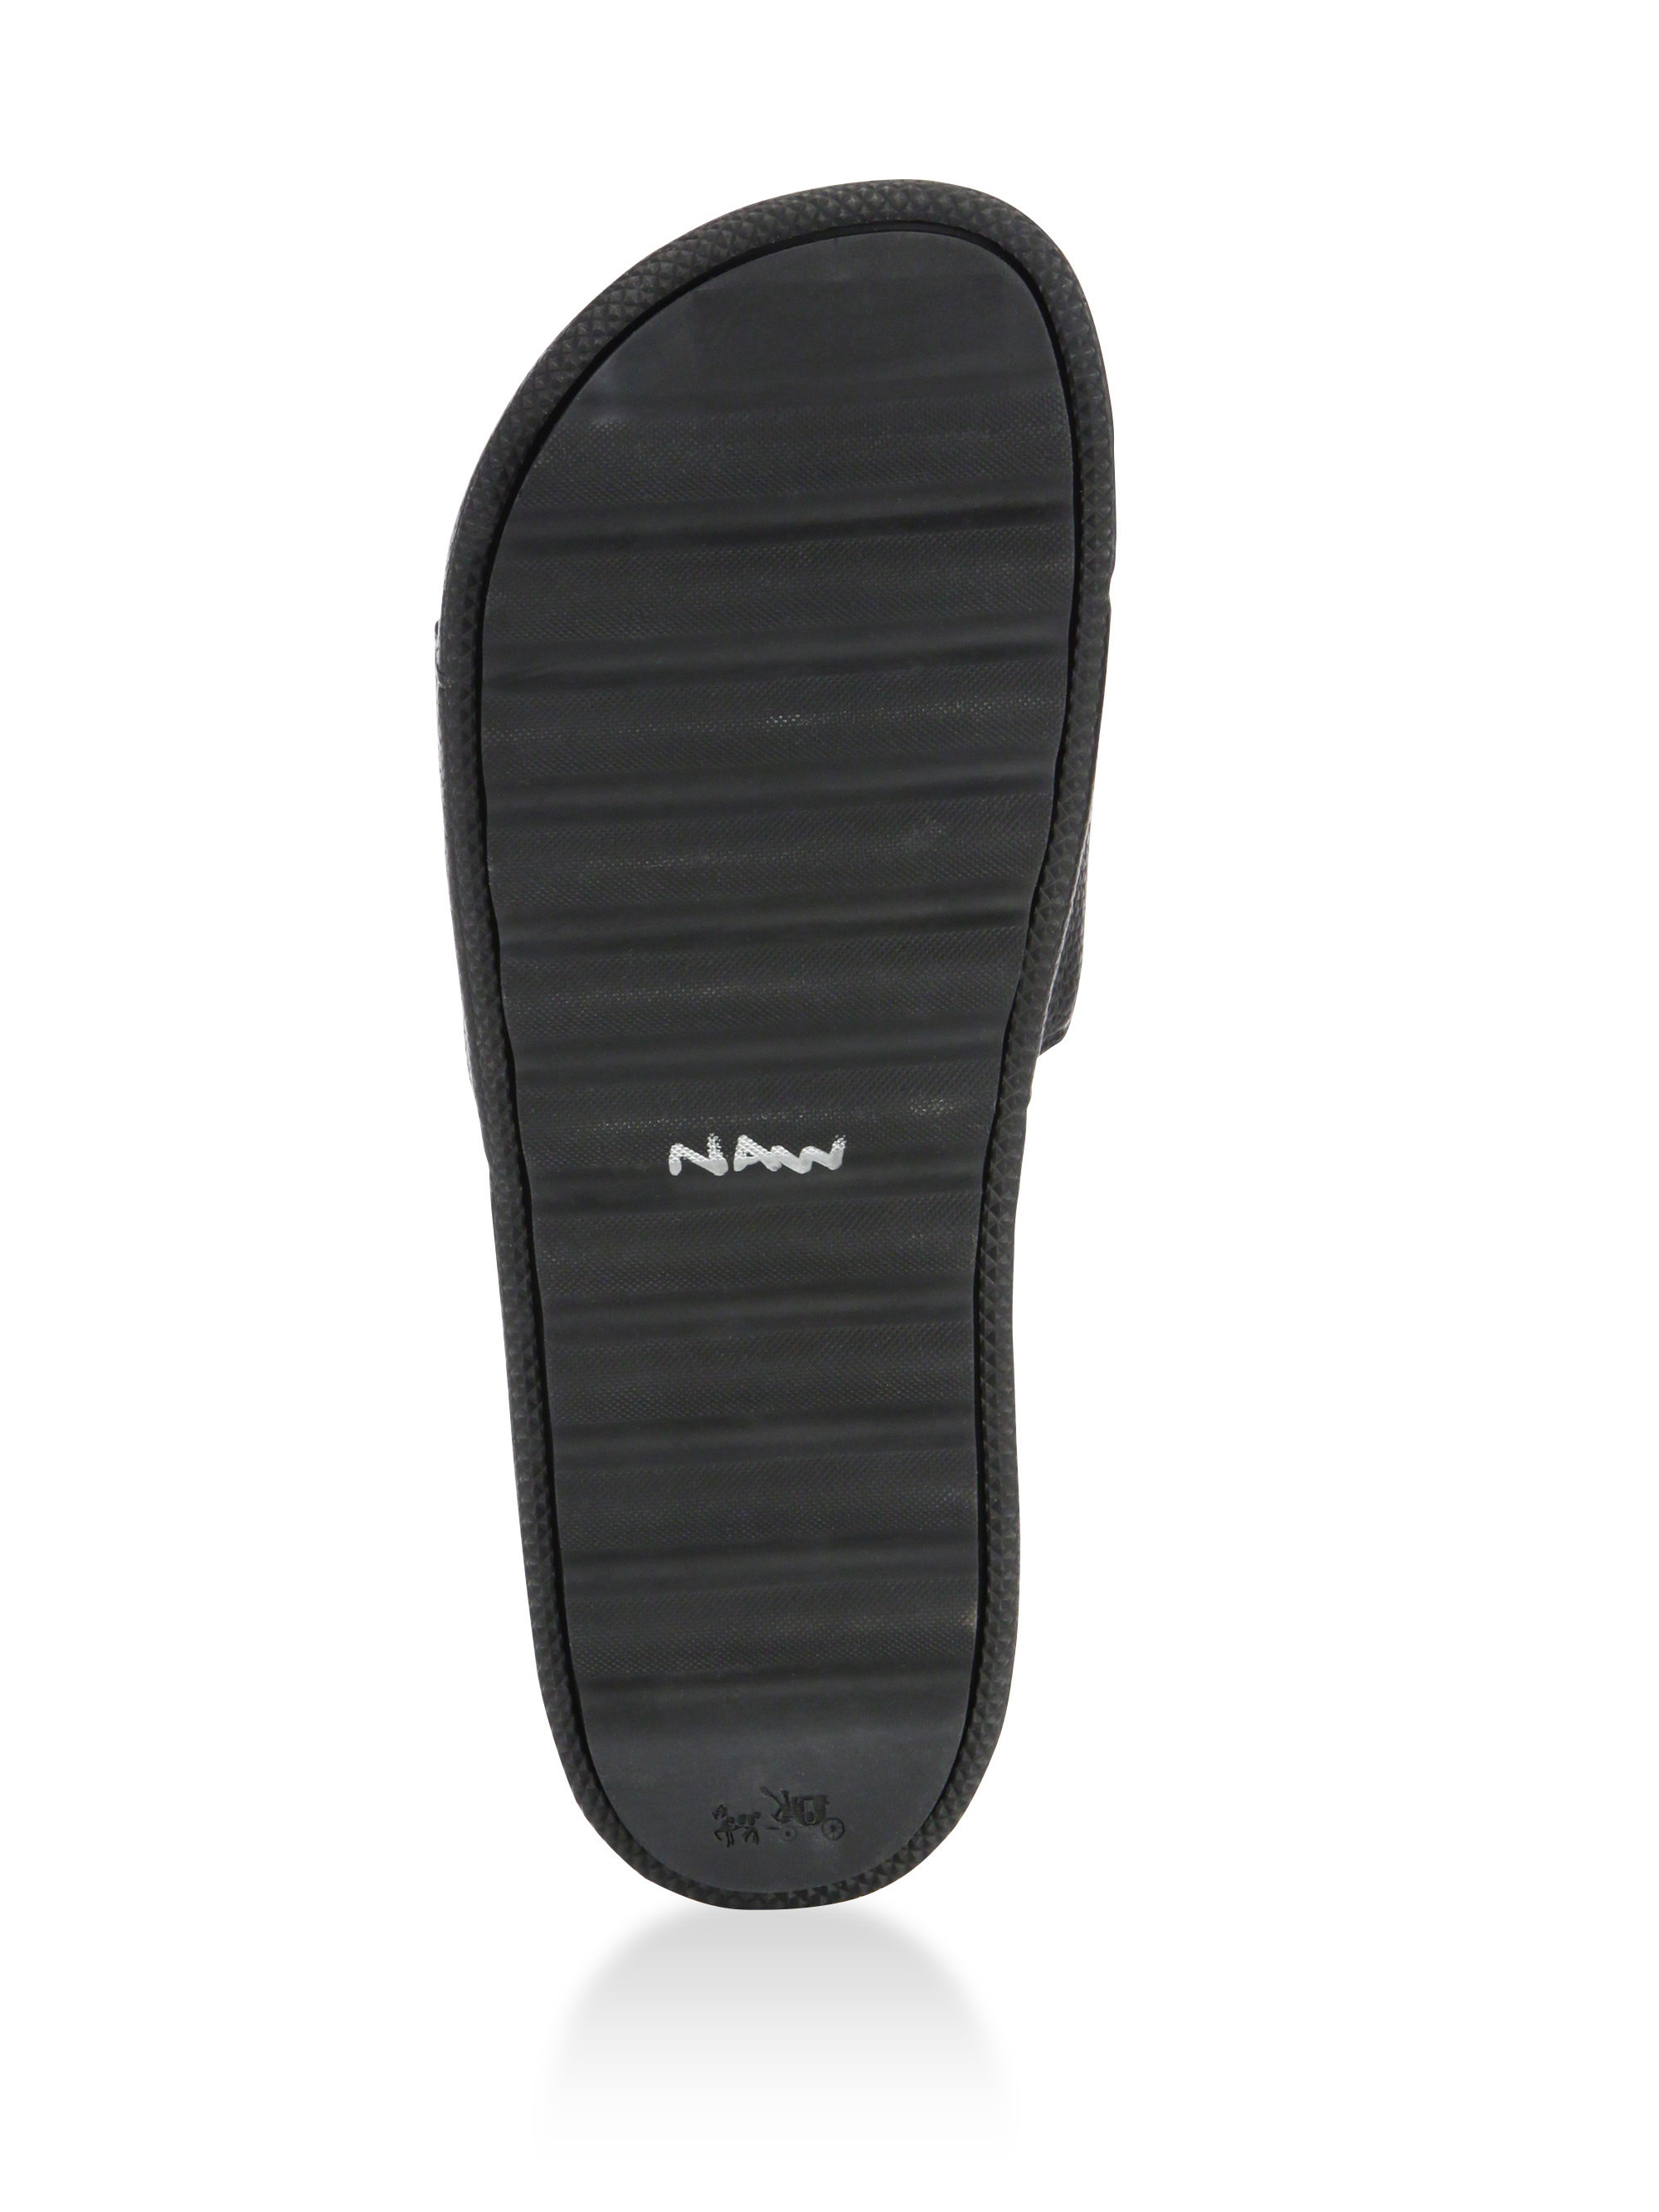 Lyst - Coach Textured Slide Sandal in Black for Men